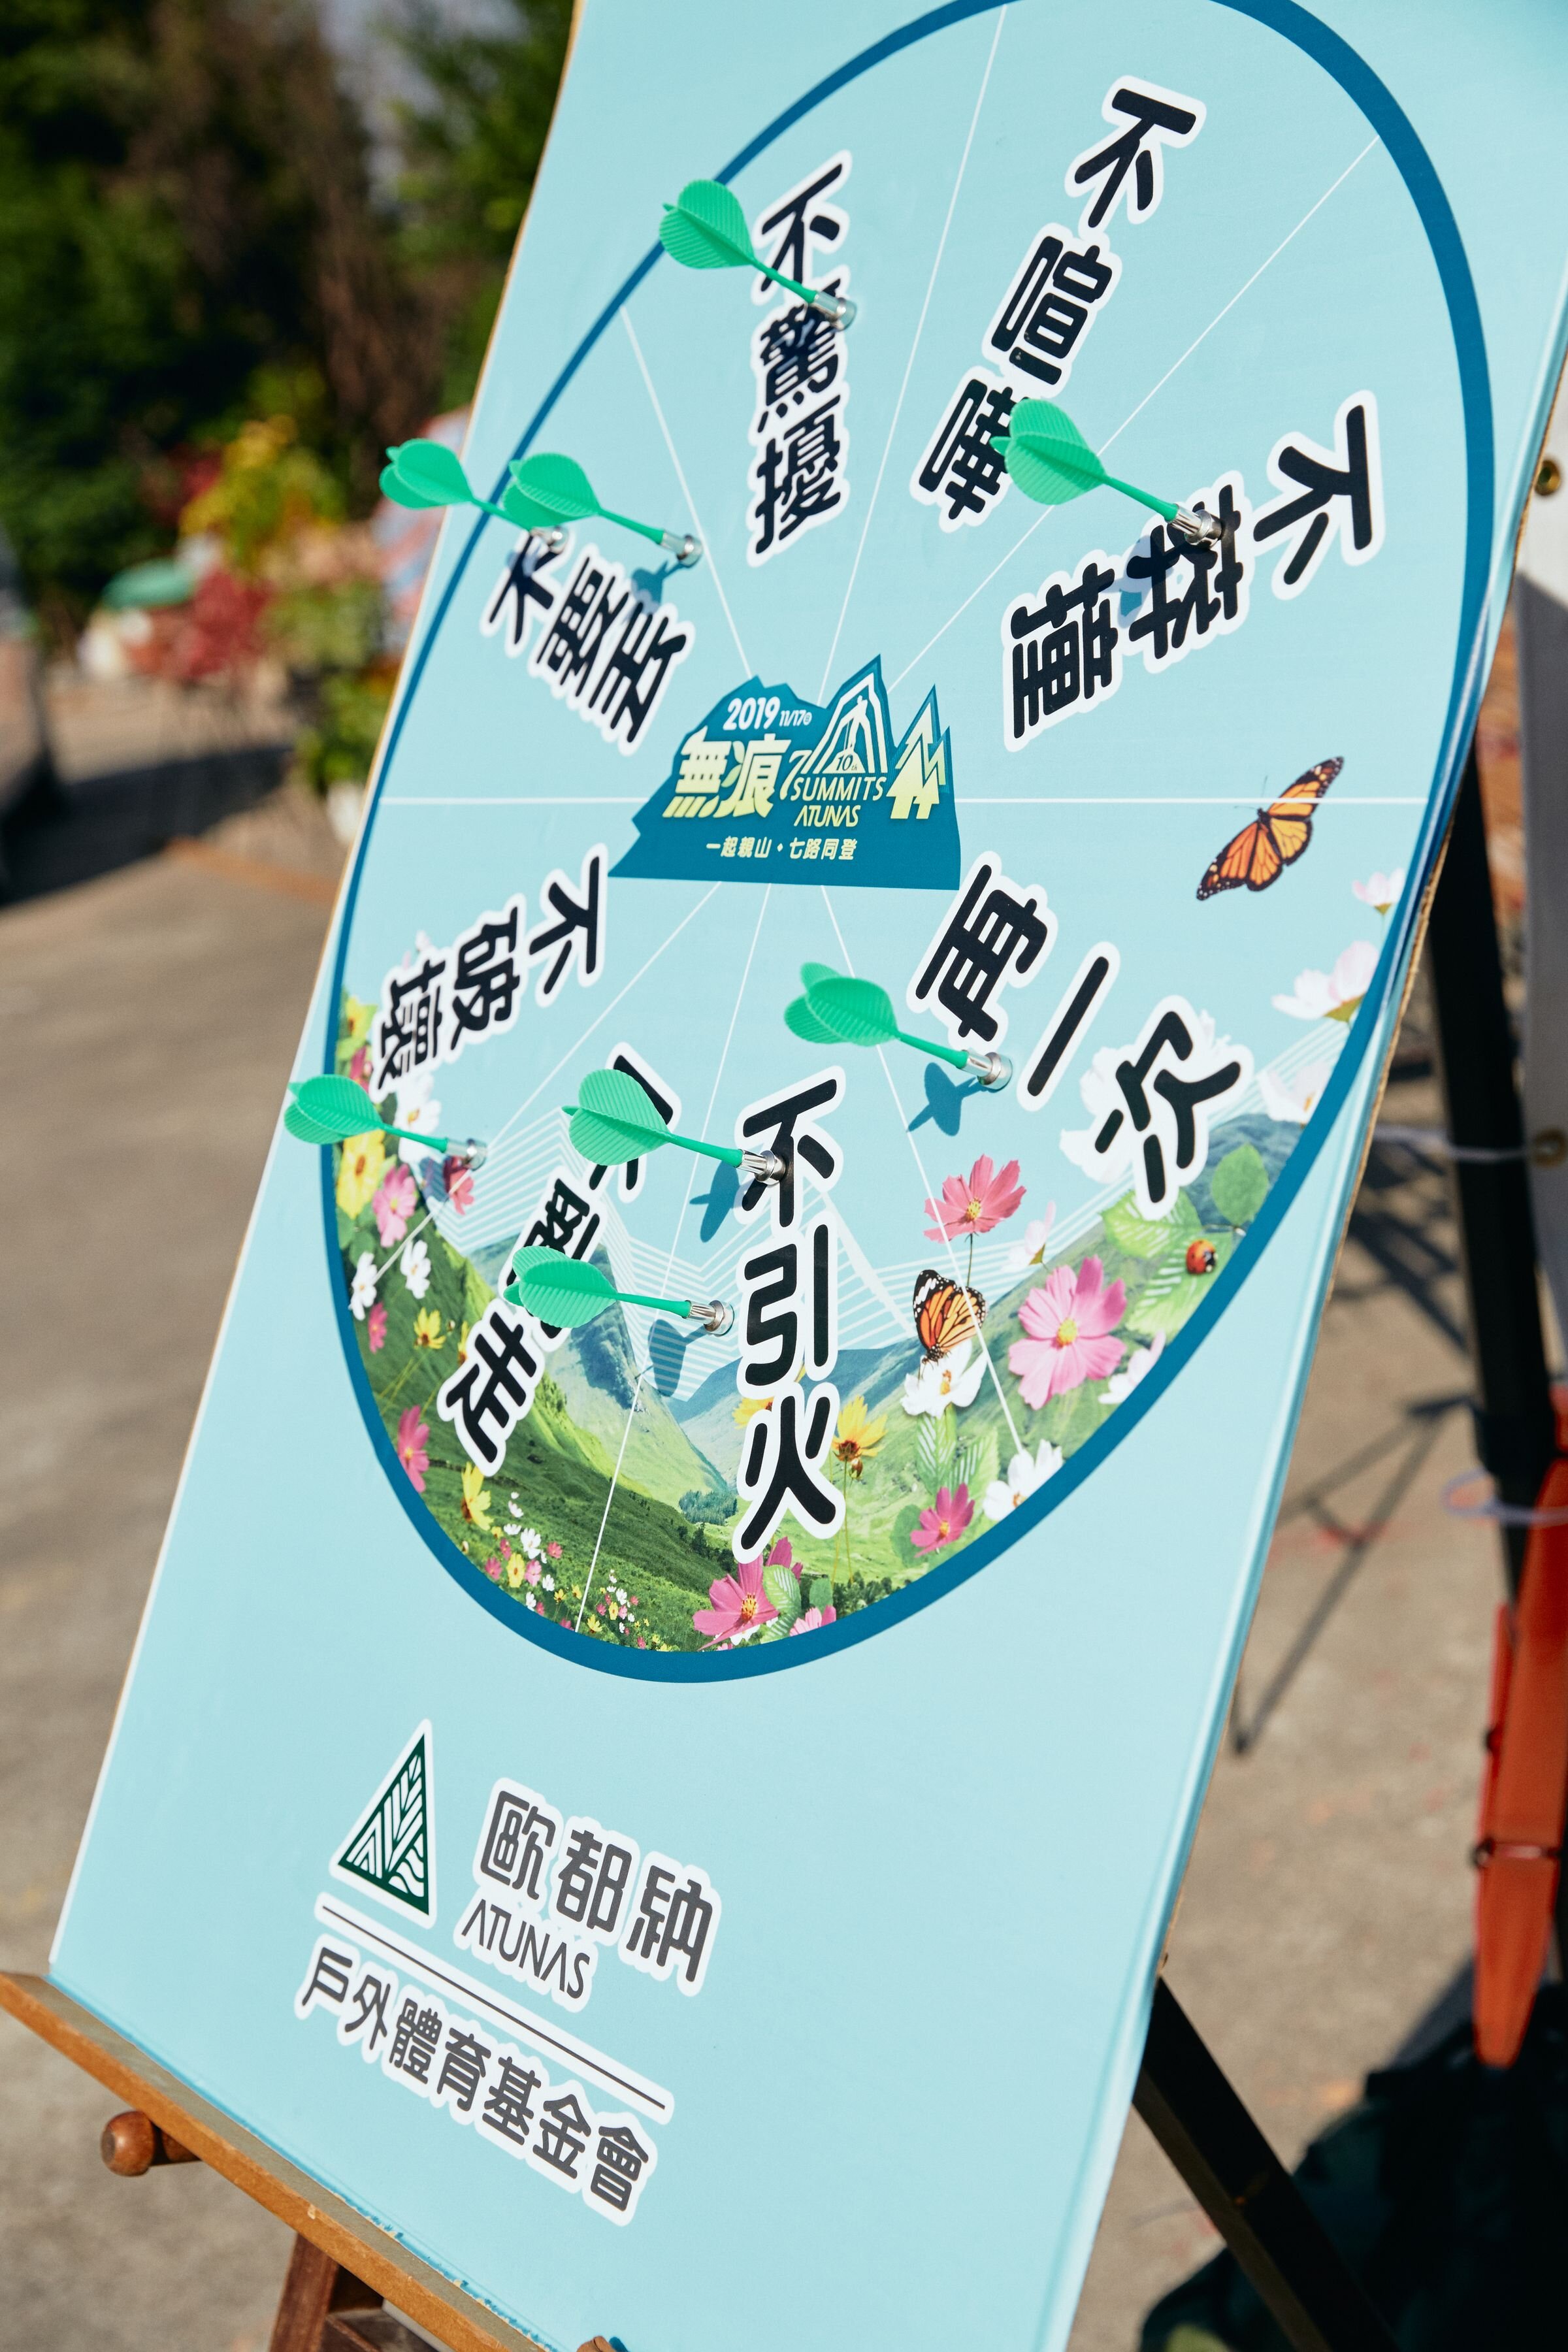 20191117-events-atunas-hiking-taipei-歐都納-無痕山林-永春高中-台北場_37.jpg